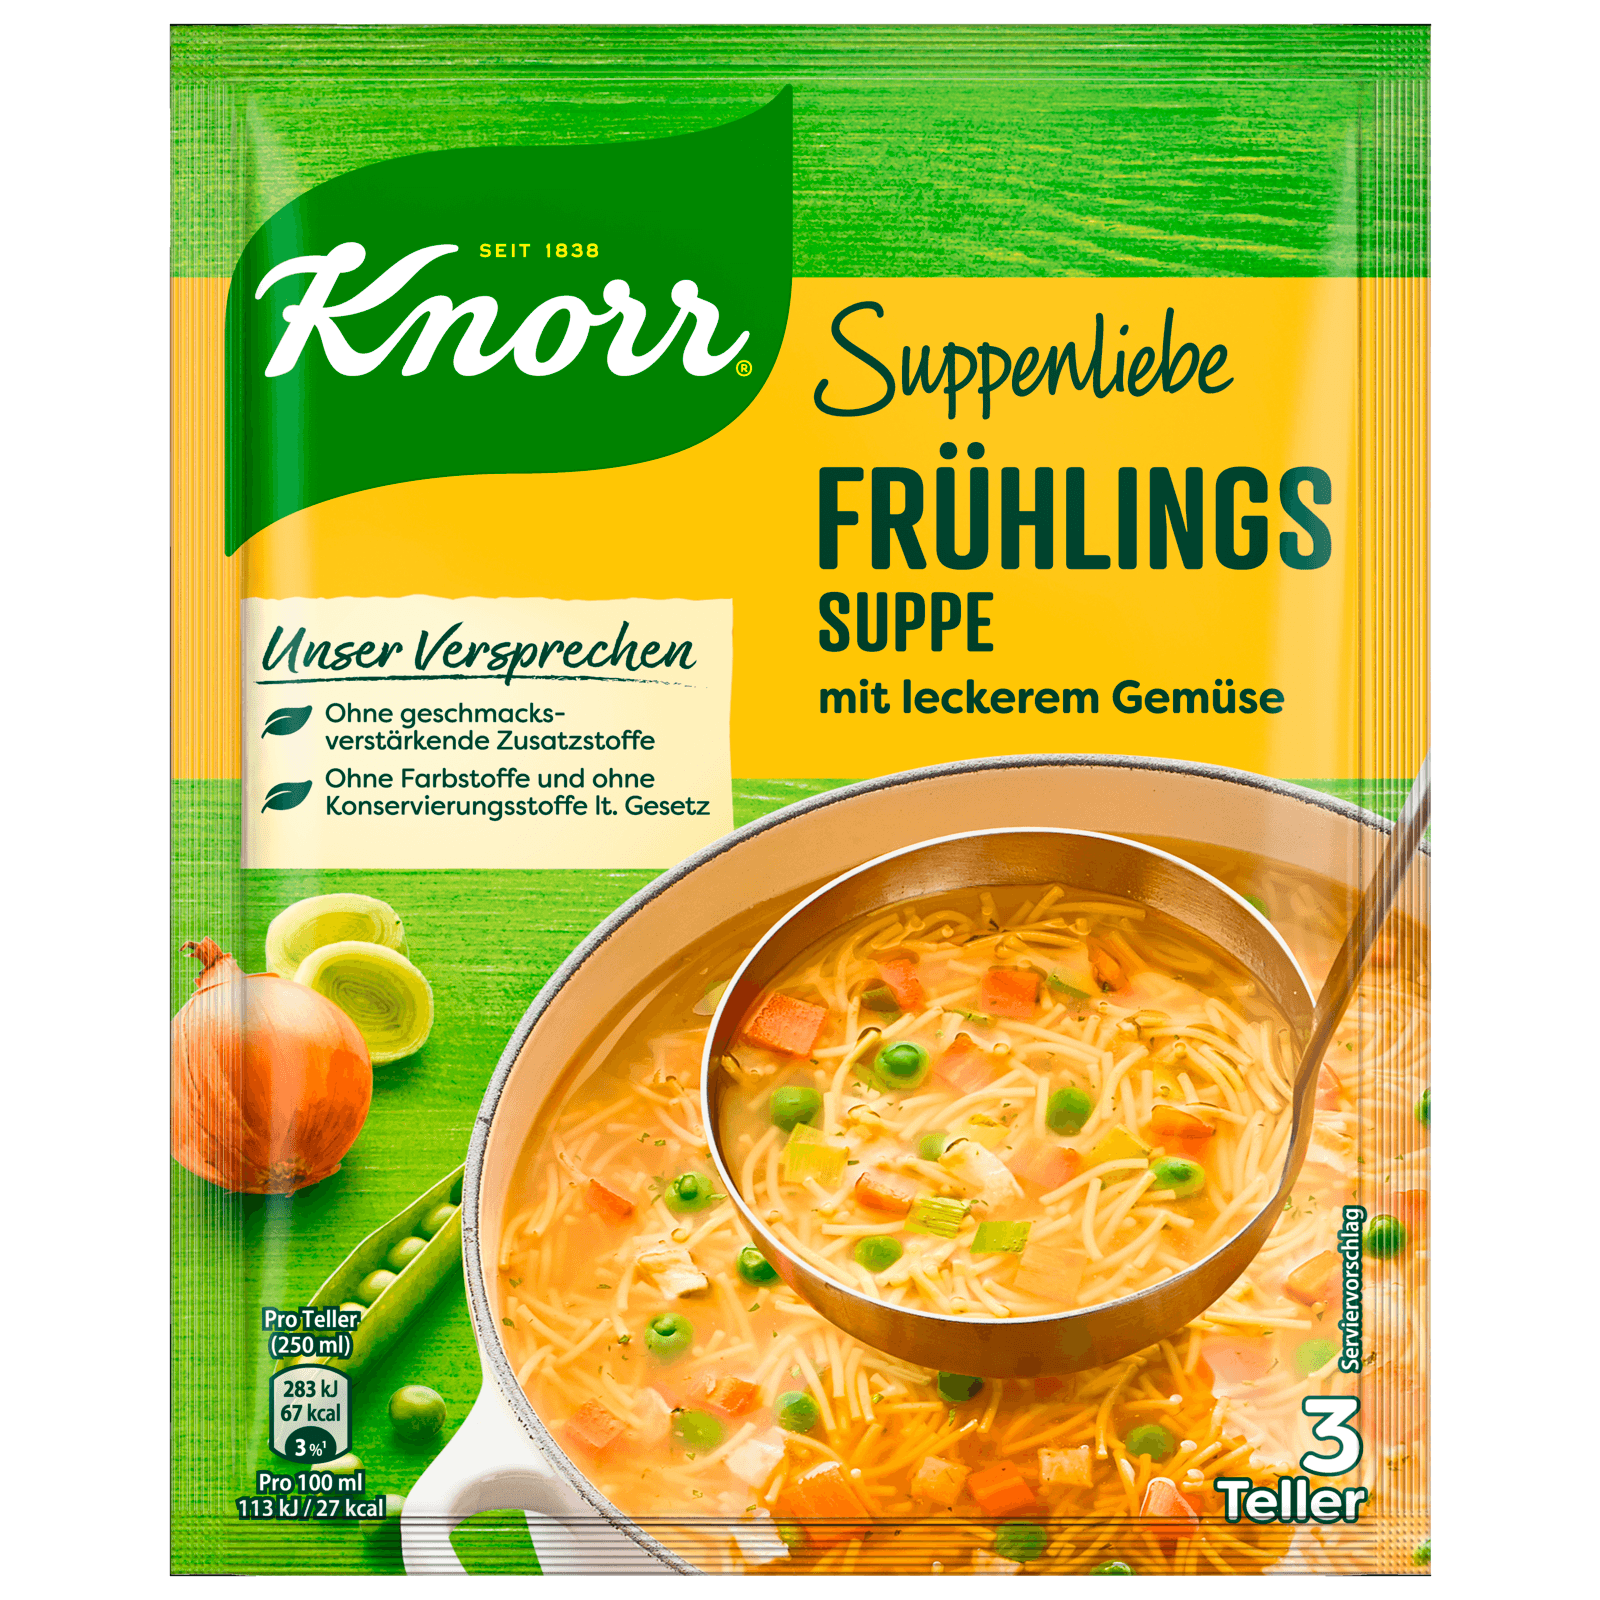 online Frühlings bei Suppenliebe 3 Suppe bestellen! Teller REWE Knorr